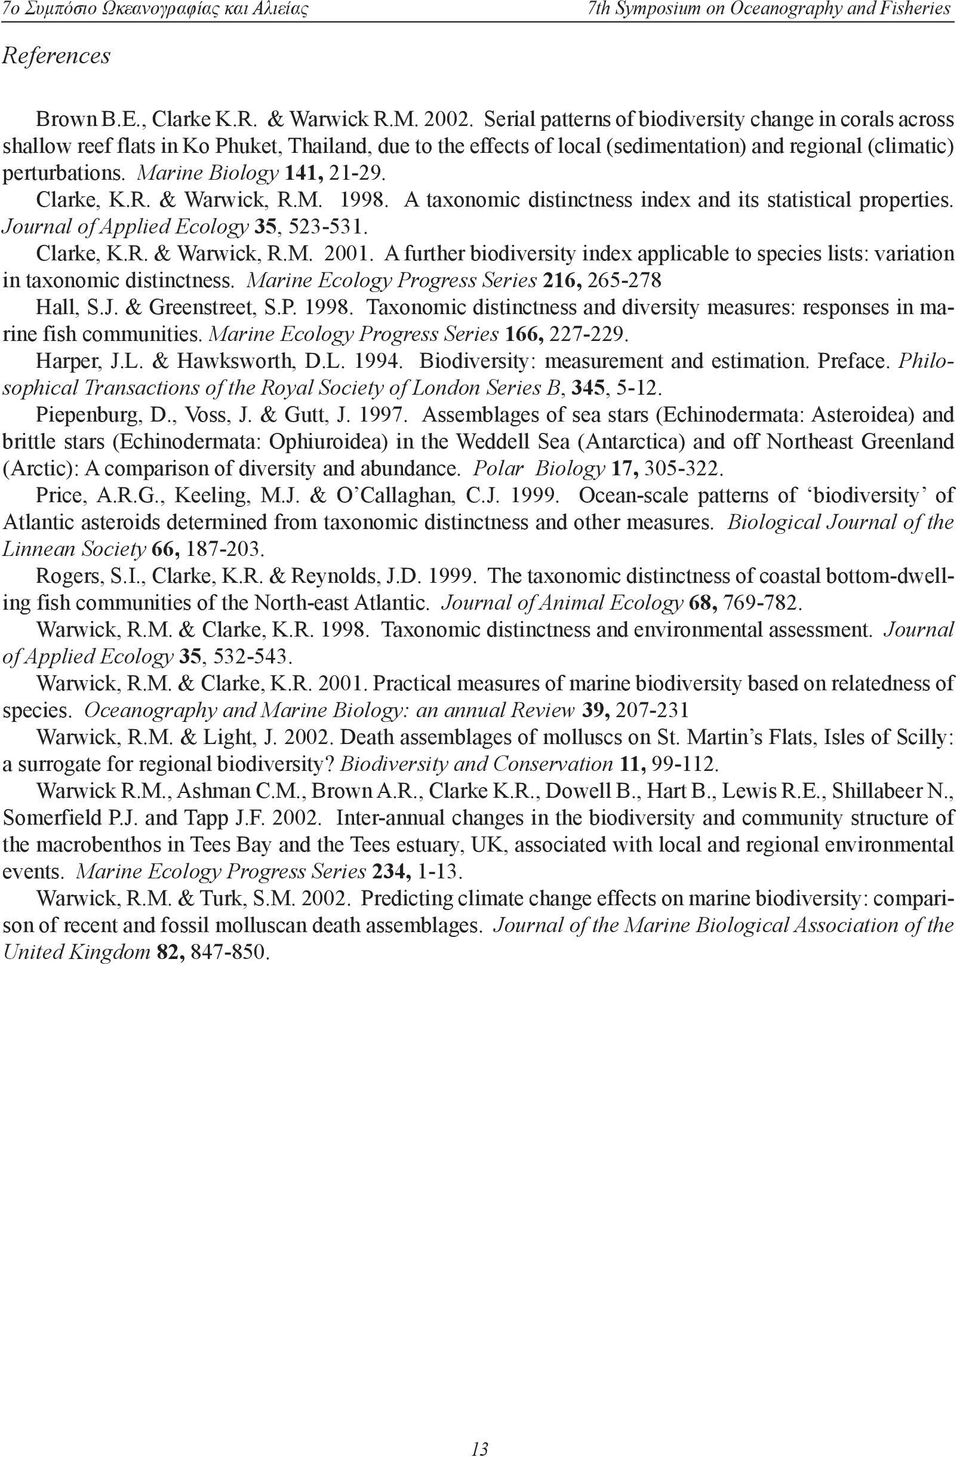 Marine Biology 4, -9. Clarke, K.R. & Warwick, R.M. 998. A taxonomic distinctness index and its statistical properties. Journal of Applied Ecology 35, 53-53. Clarke, K.R. & Warwick, R.M. 00.